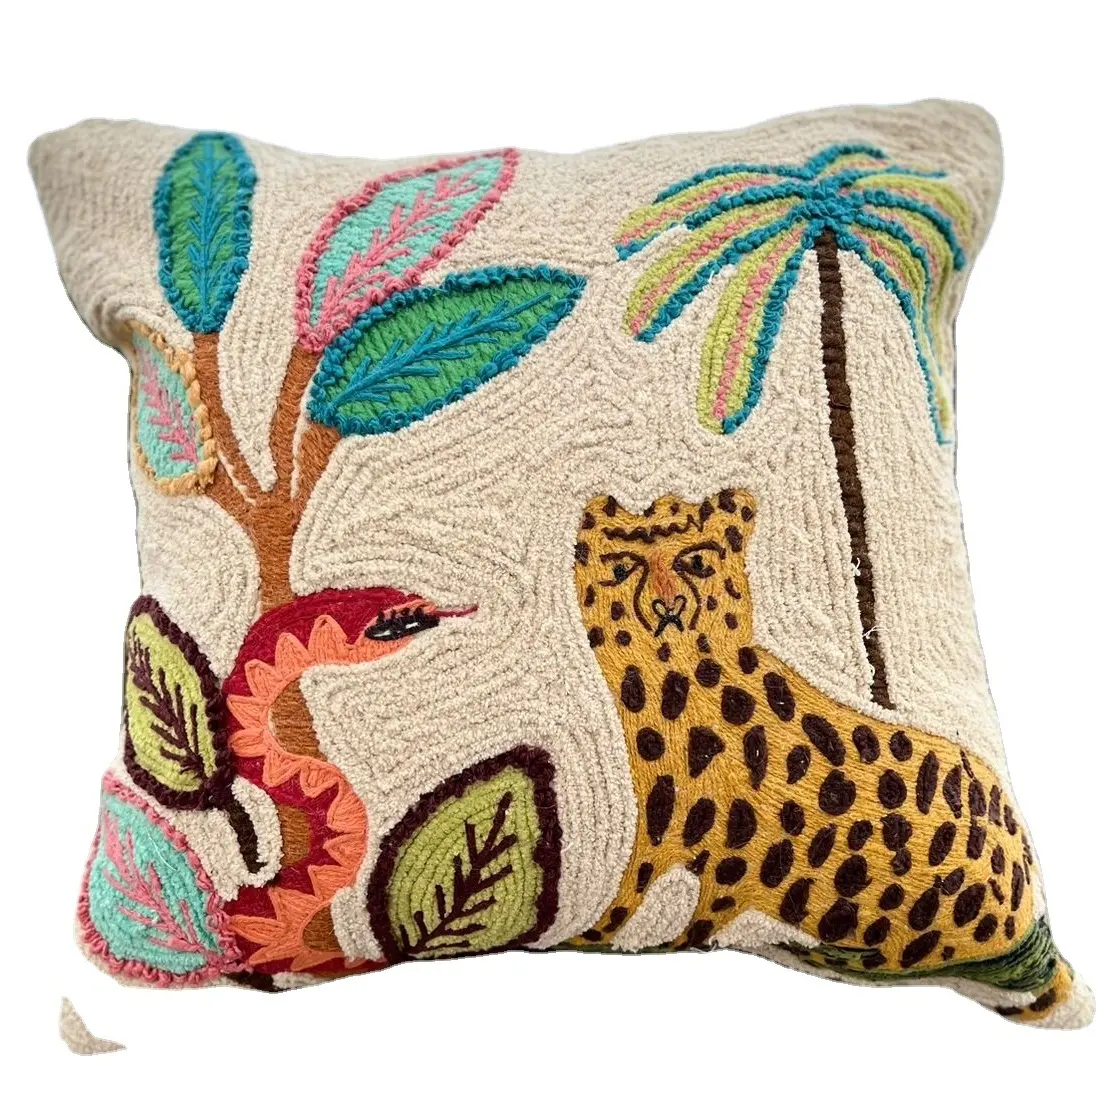 Handmade Animal Embroidered Customize Cushion Cover Decorative Bohemian Throw Blanket Pillow Cover Boho Decor Living Room Decor